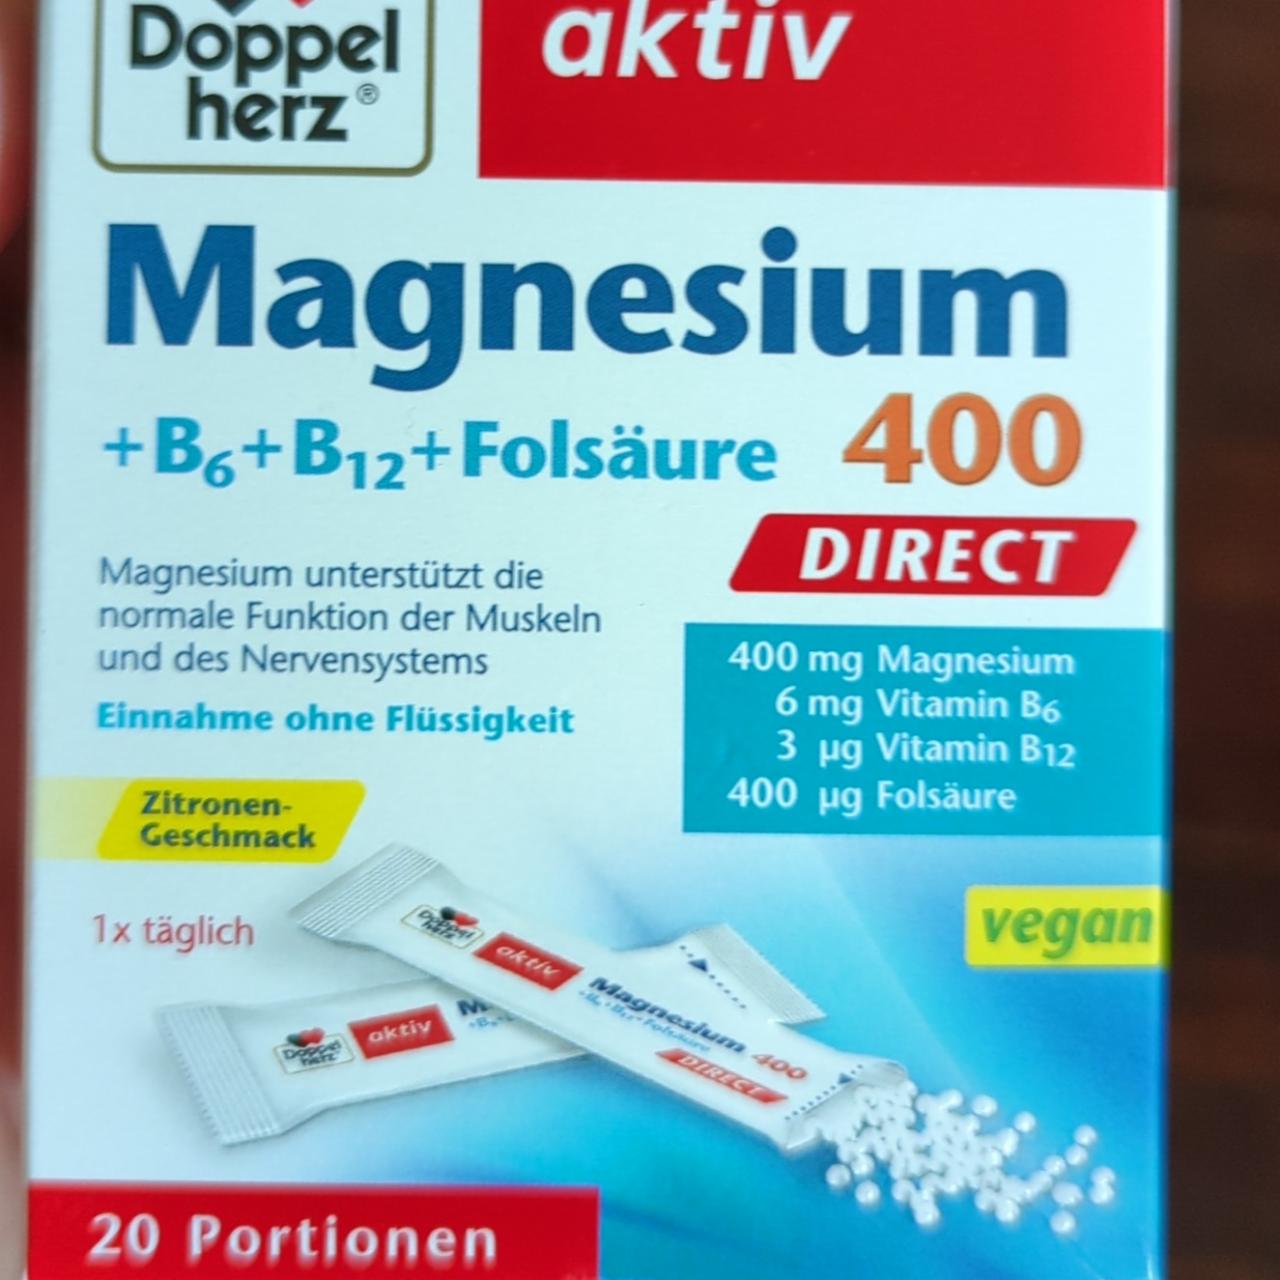 Fotografie - Magnesium 400 Direct Doppel herz